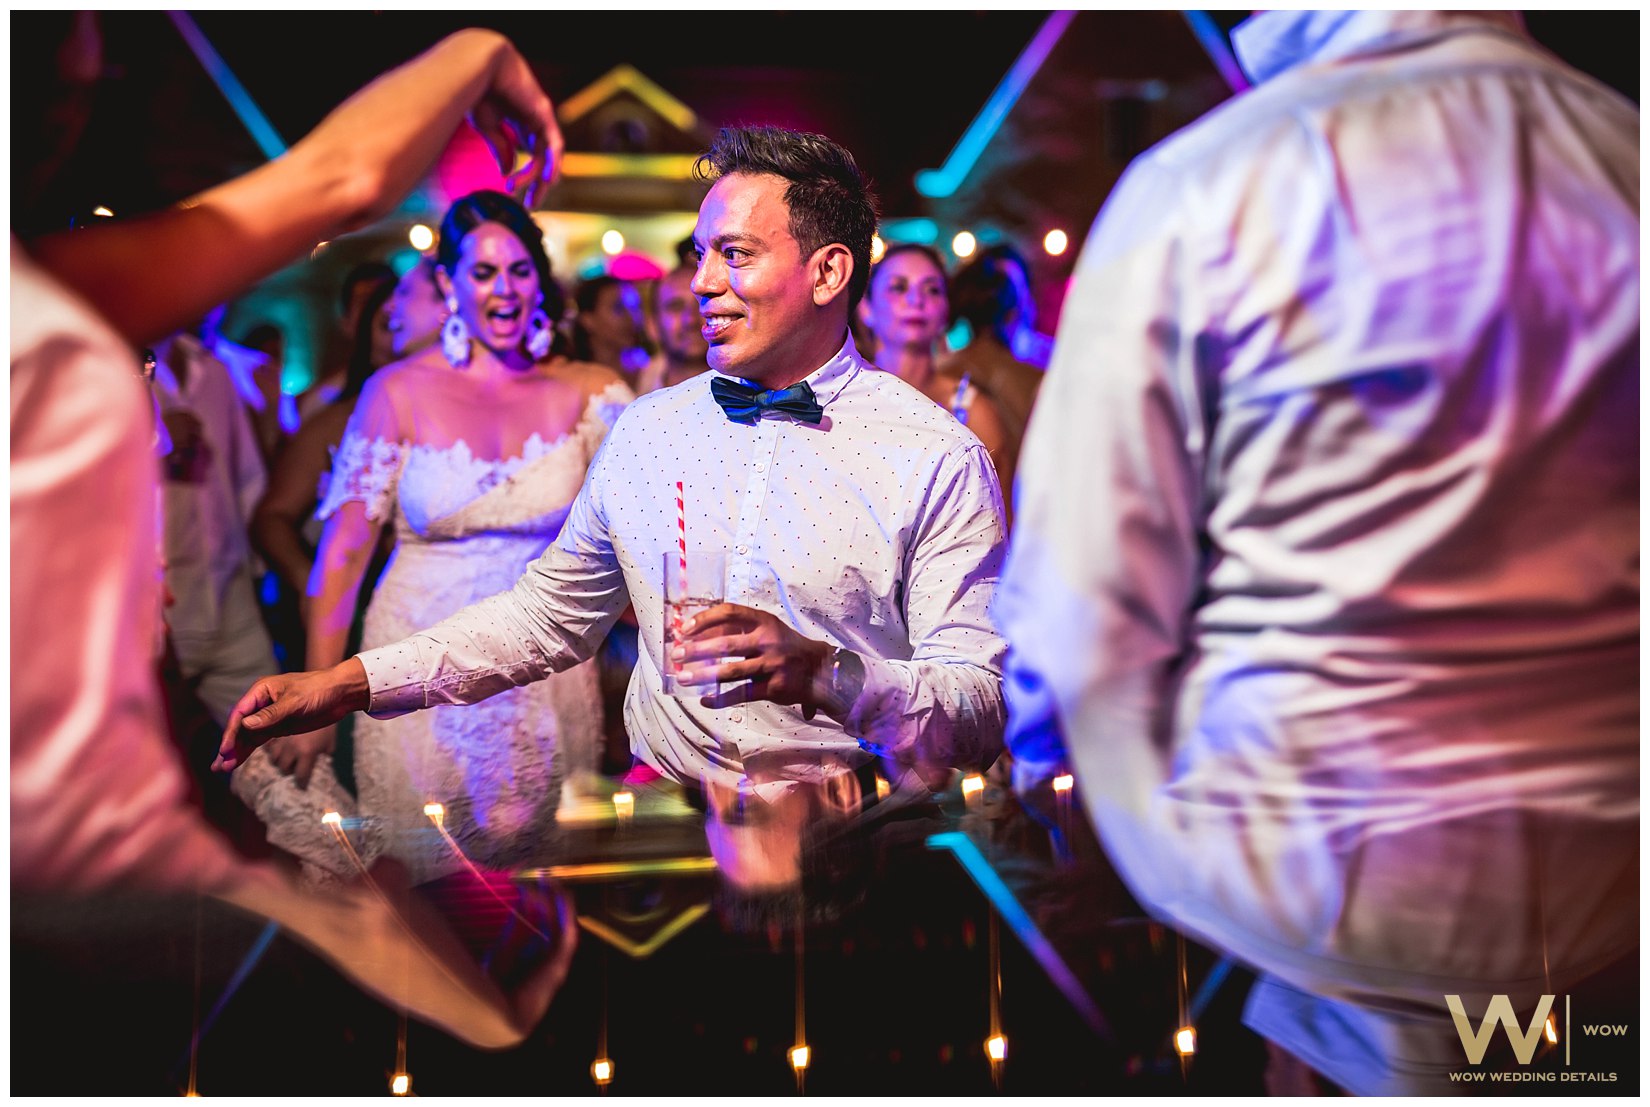 Jonna & Andre - Wow Wedding Details Photography @ Santa Martha Curacao_0032.jpg